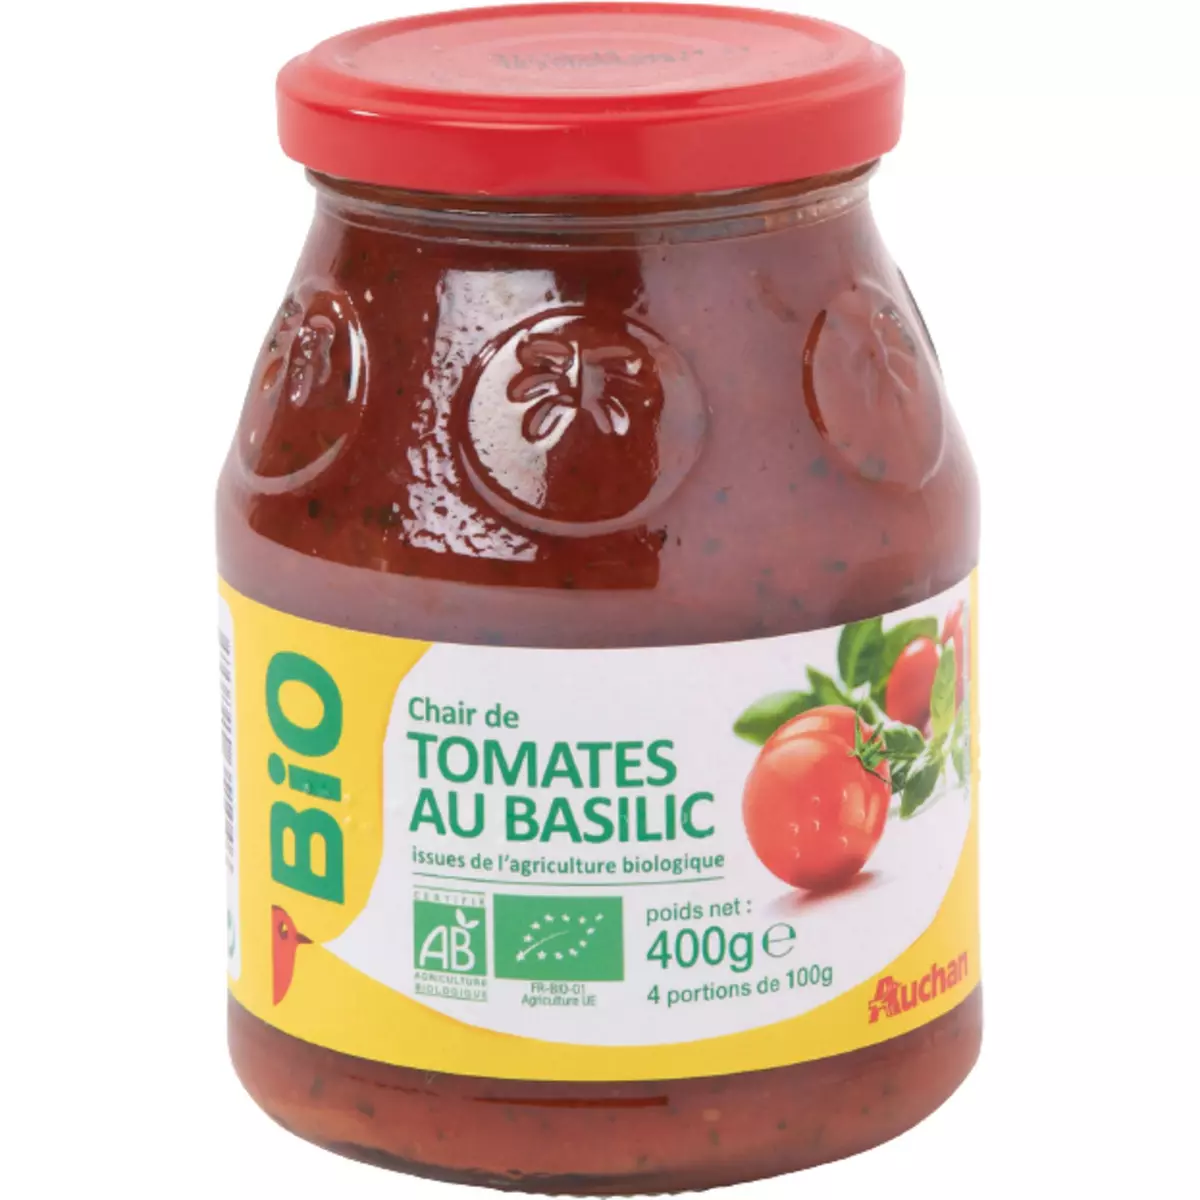 AUCHAN BIO Chair de tomates au basilic en bocal 400g